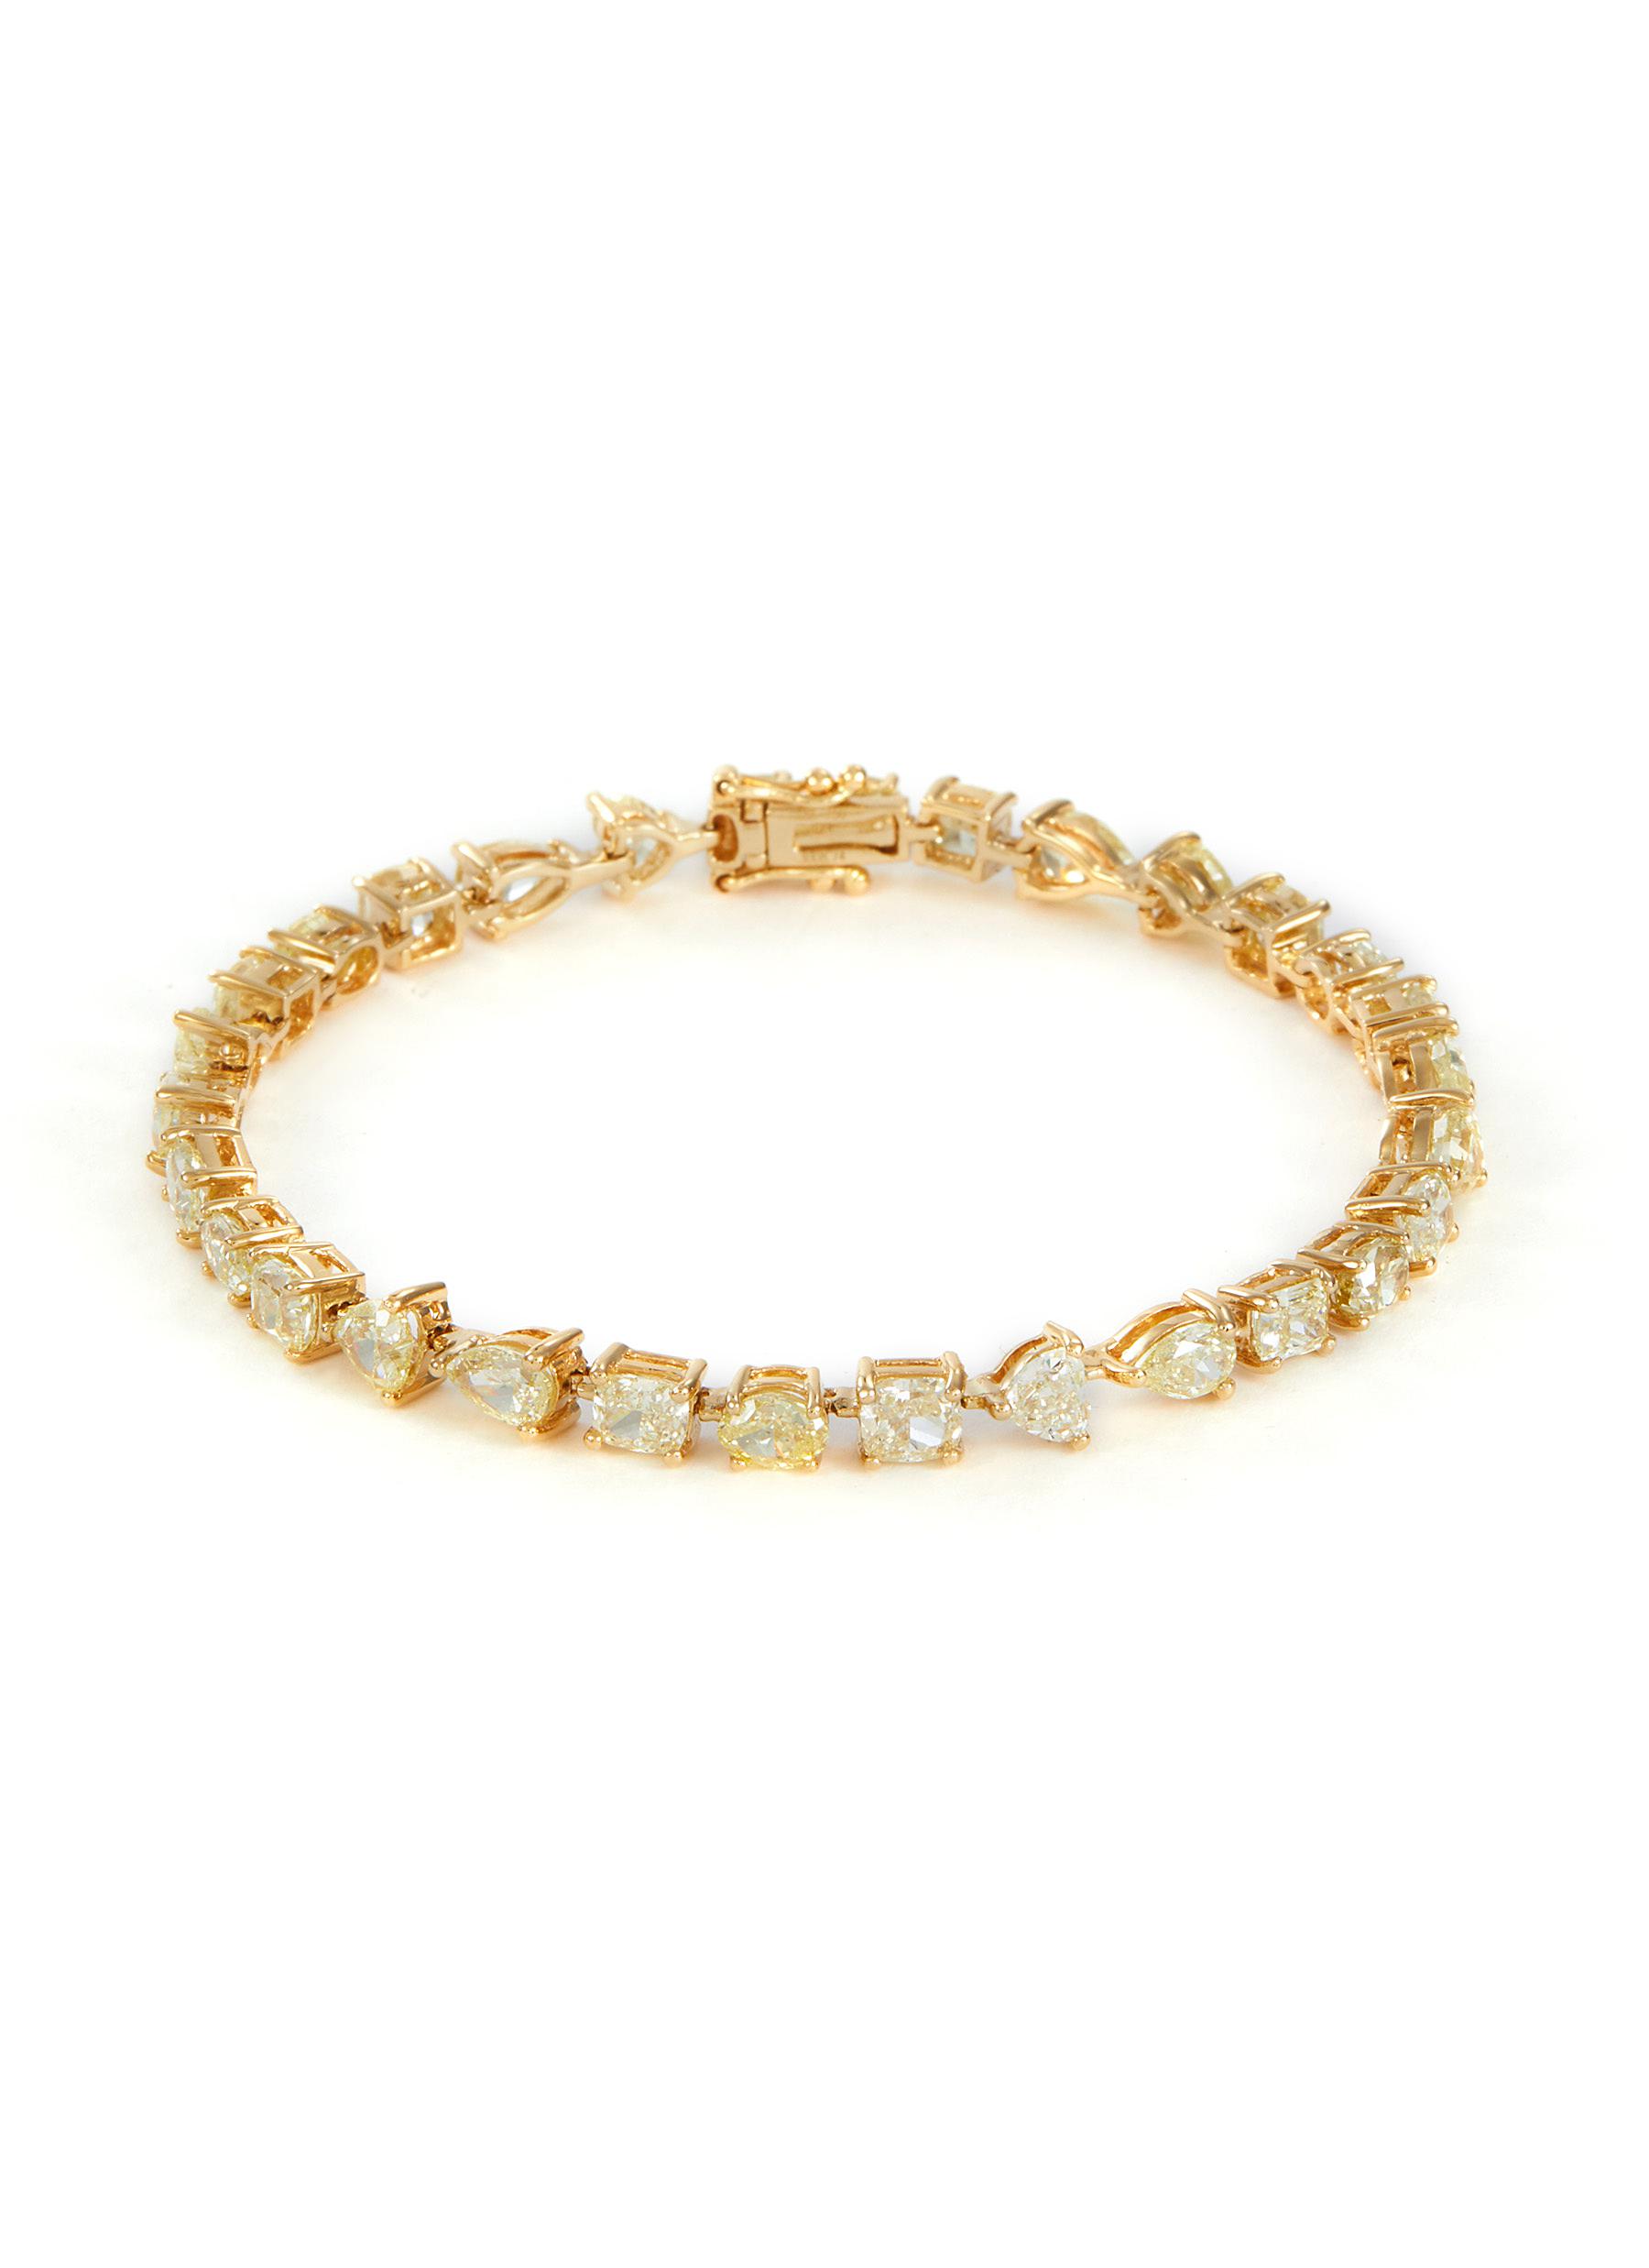 18ct white gold 44=6.31ct oval diamond tennis bracelet | Cerrone